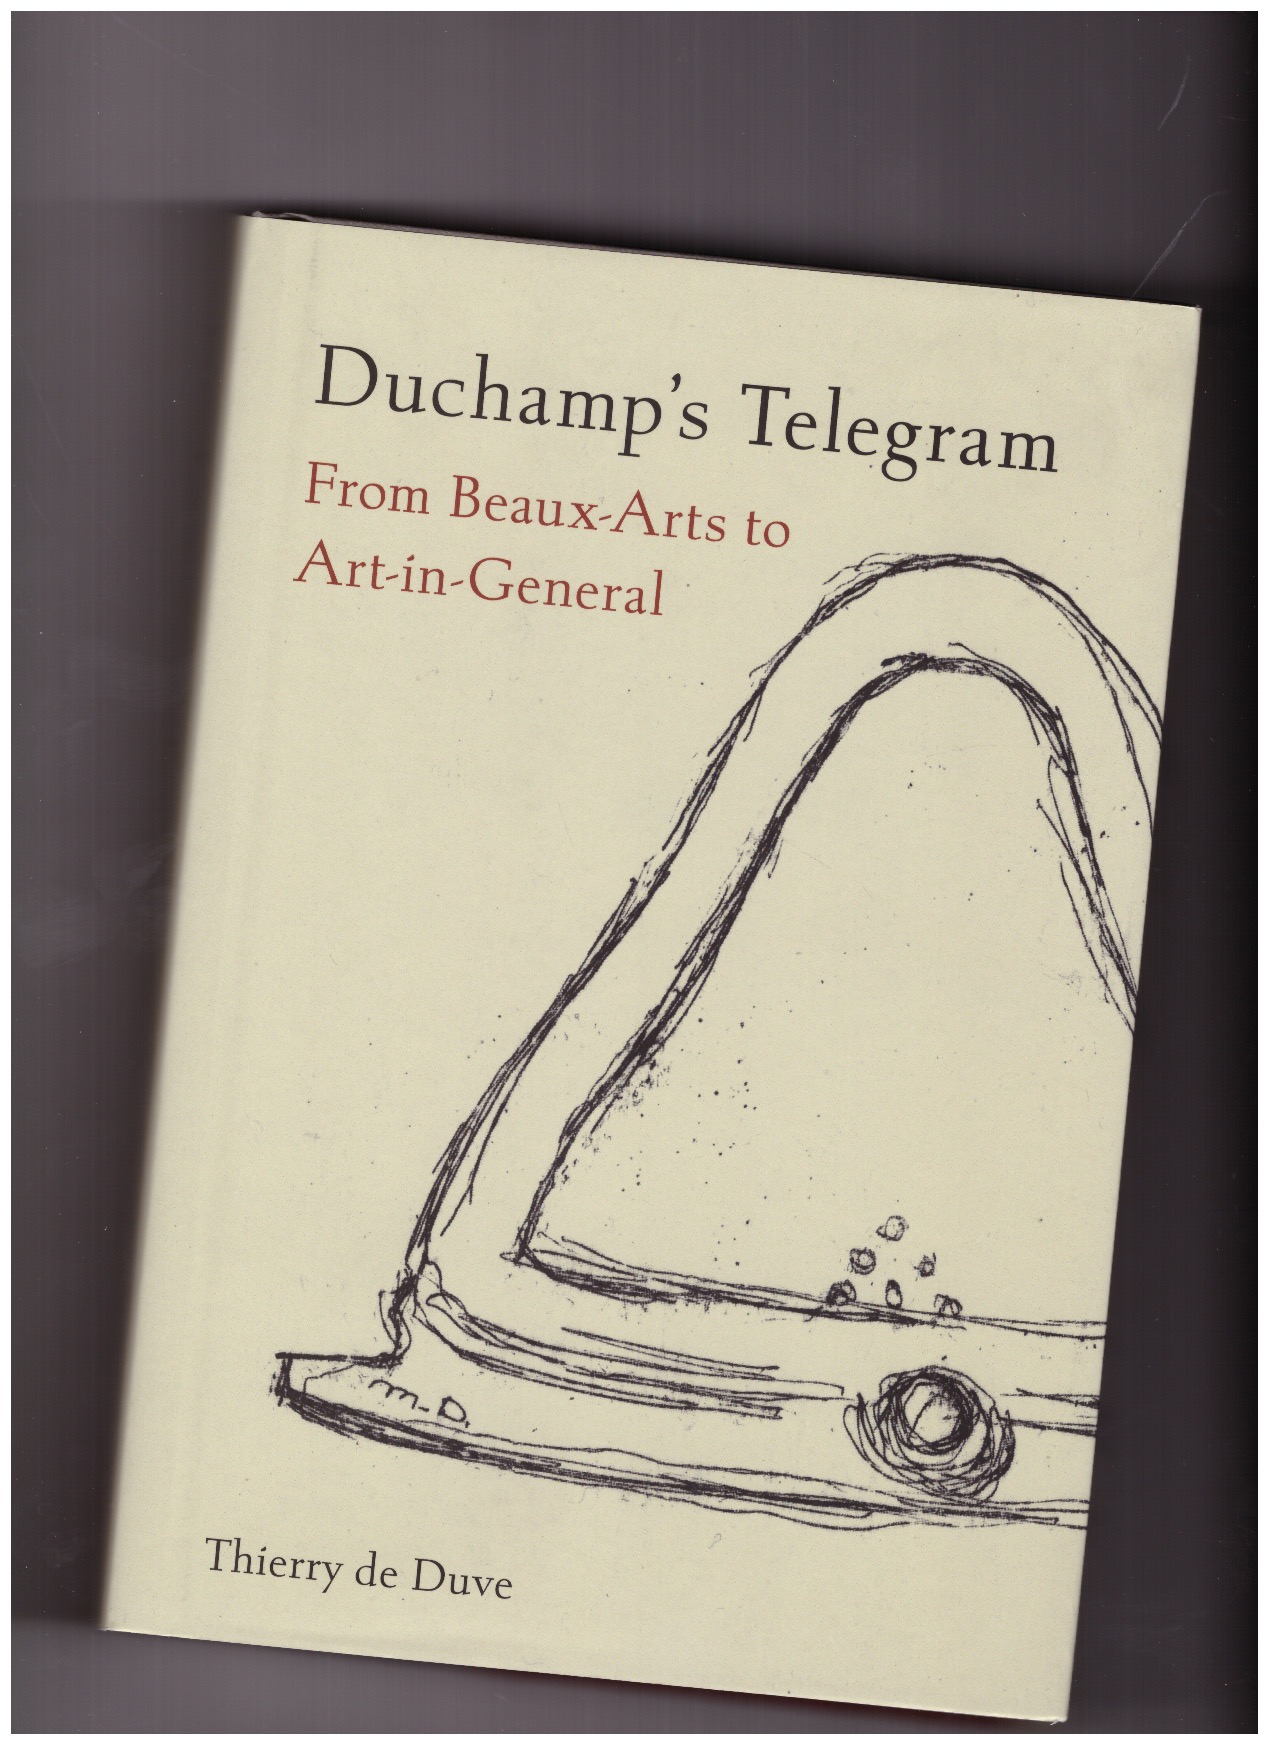 DE DUVE, Thierry - Duchamp's Telegram - From Beaux-Arts to Art-in-General